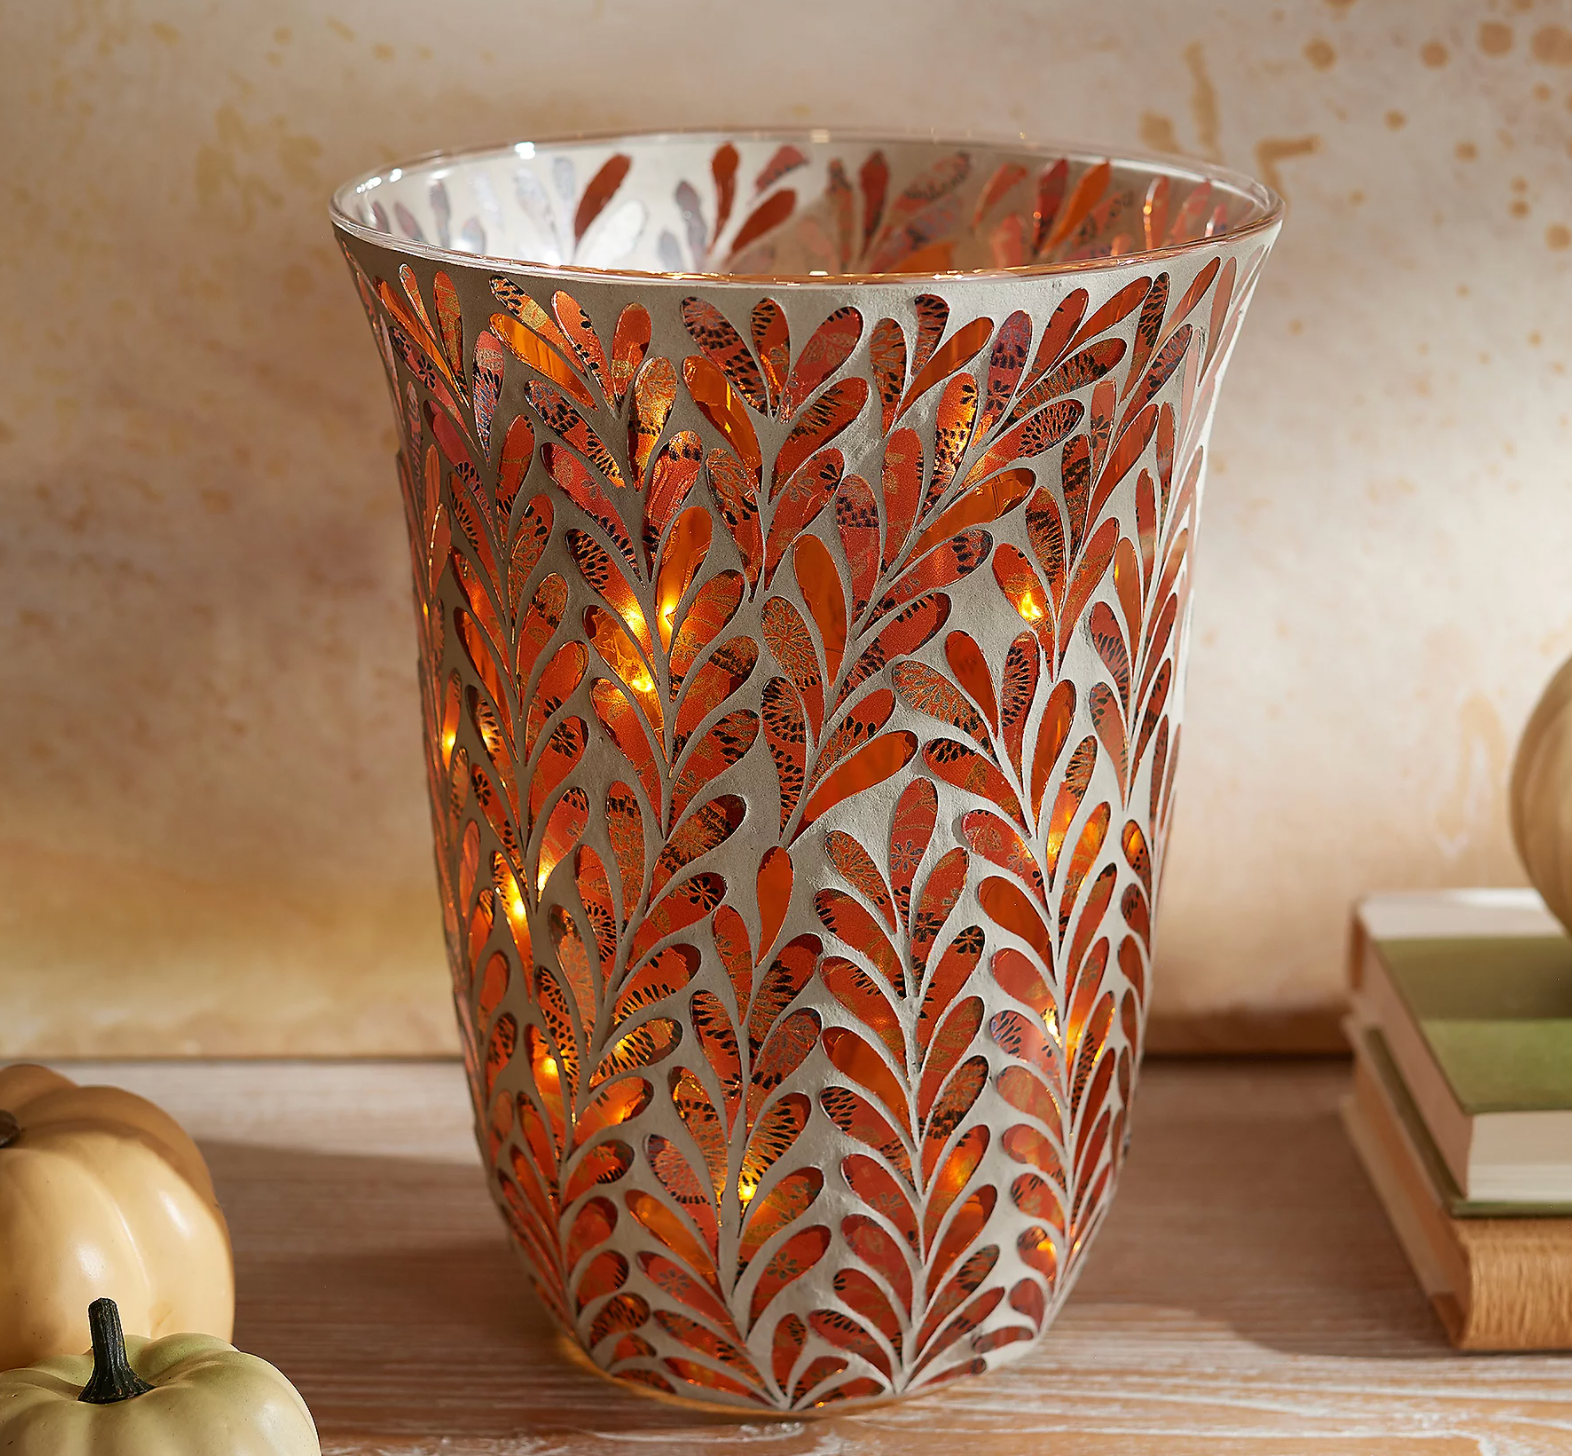 10" Illuminated Mosaic Leaf Curved Vase by Valerie